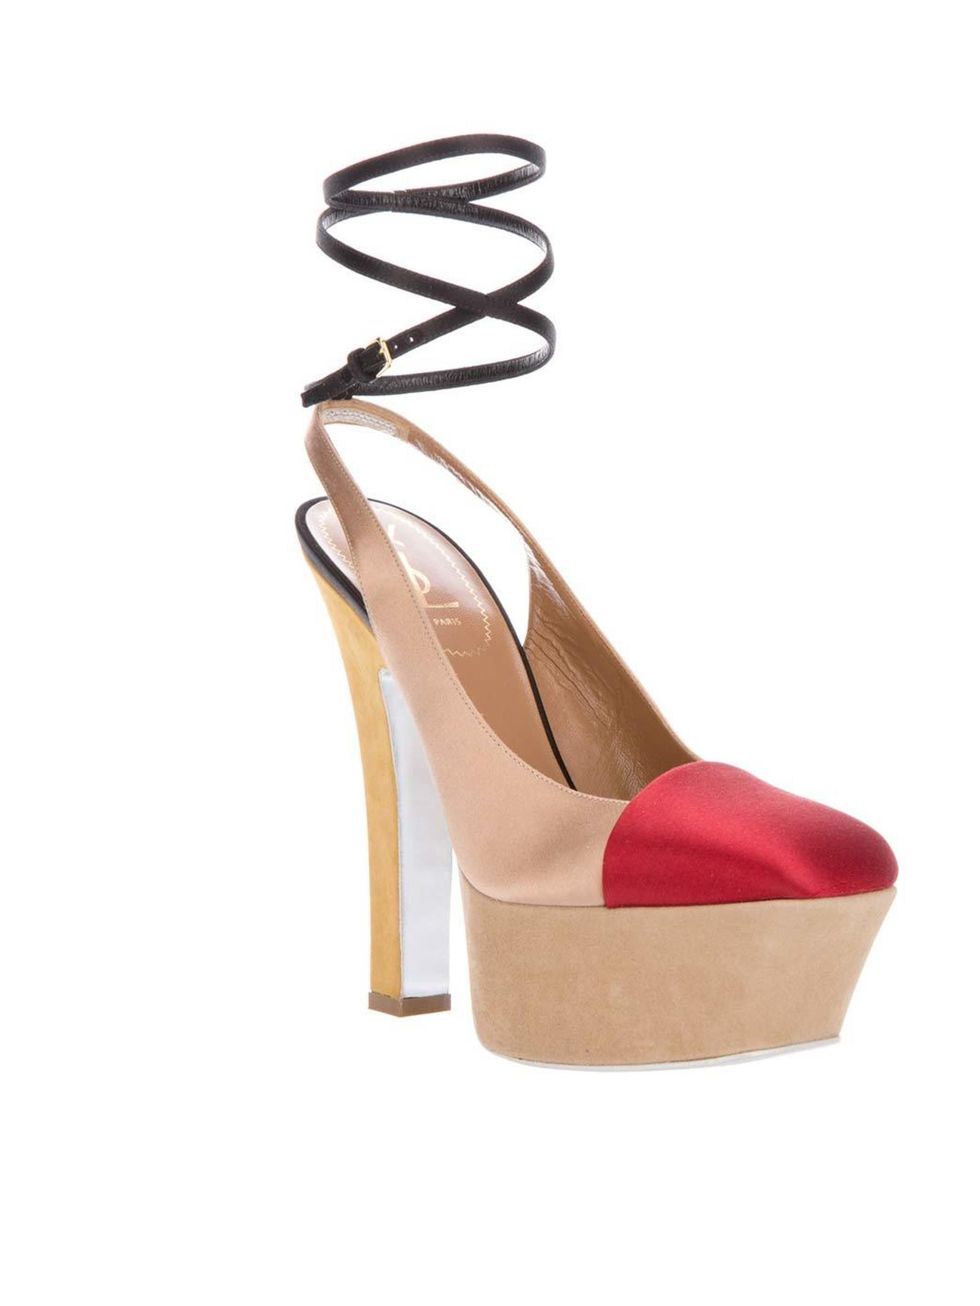 <p>YSL obsession shoes, £588.18 at <a href="http://www.farfetch.com/shopping/women/yves-saint-laurent-obsession-sandal-item-10195429.aspx">Farfetch.com</a></p>